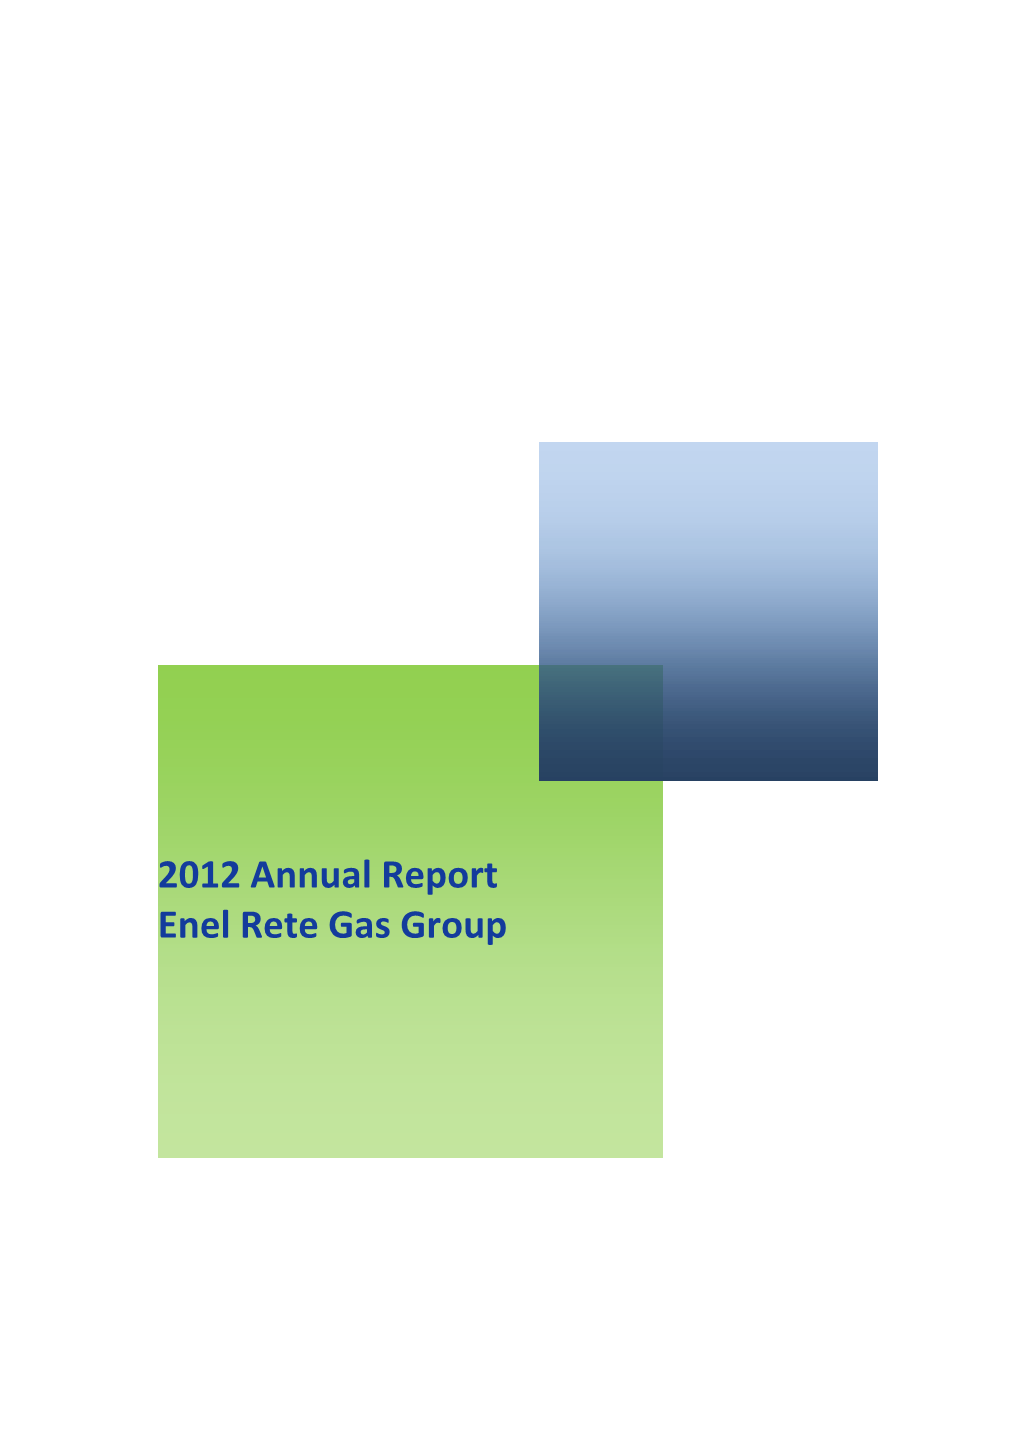 2012 Annual Report Enel Rete Gas Group